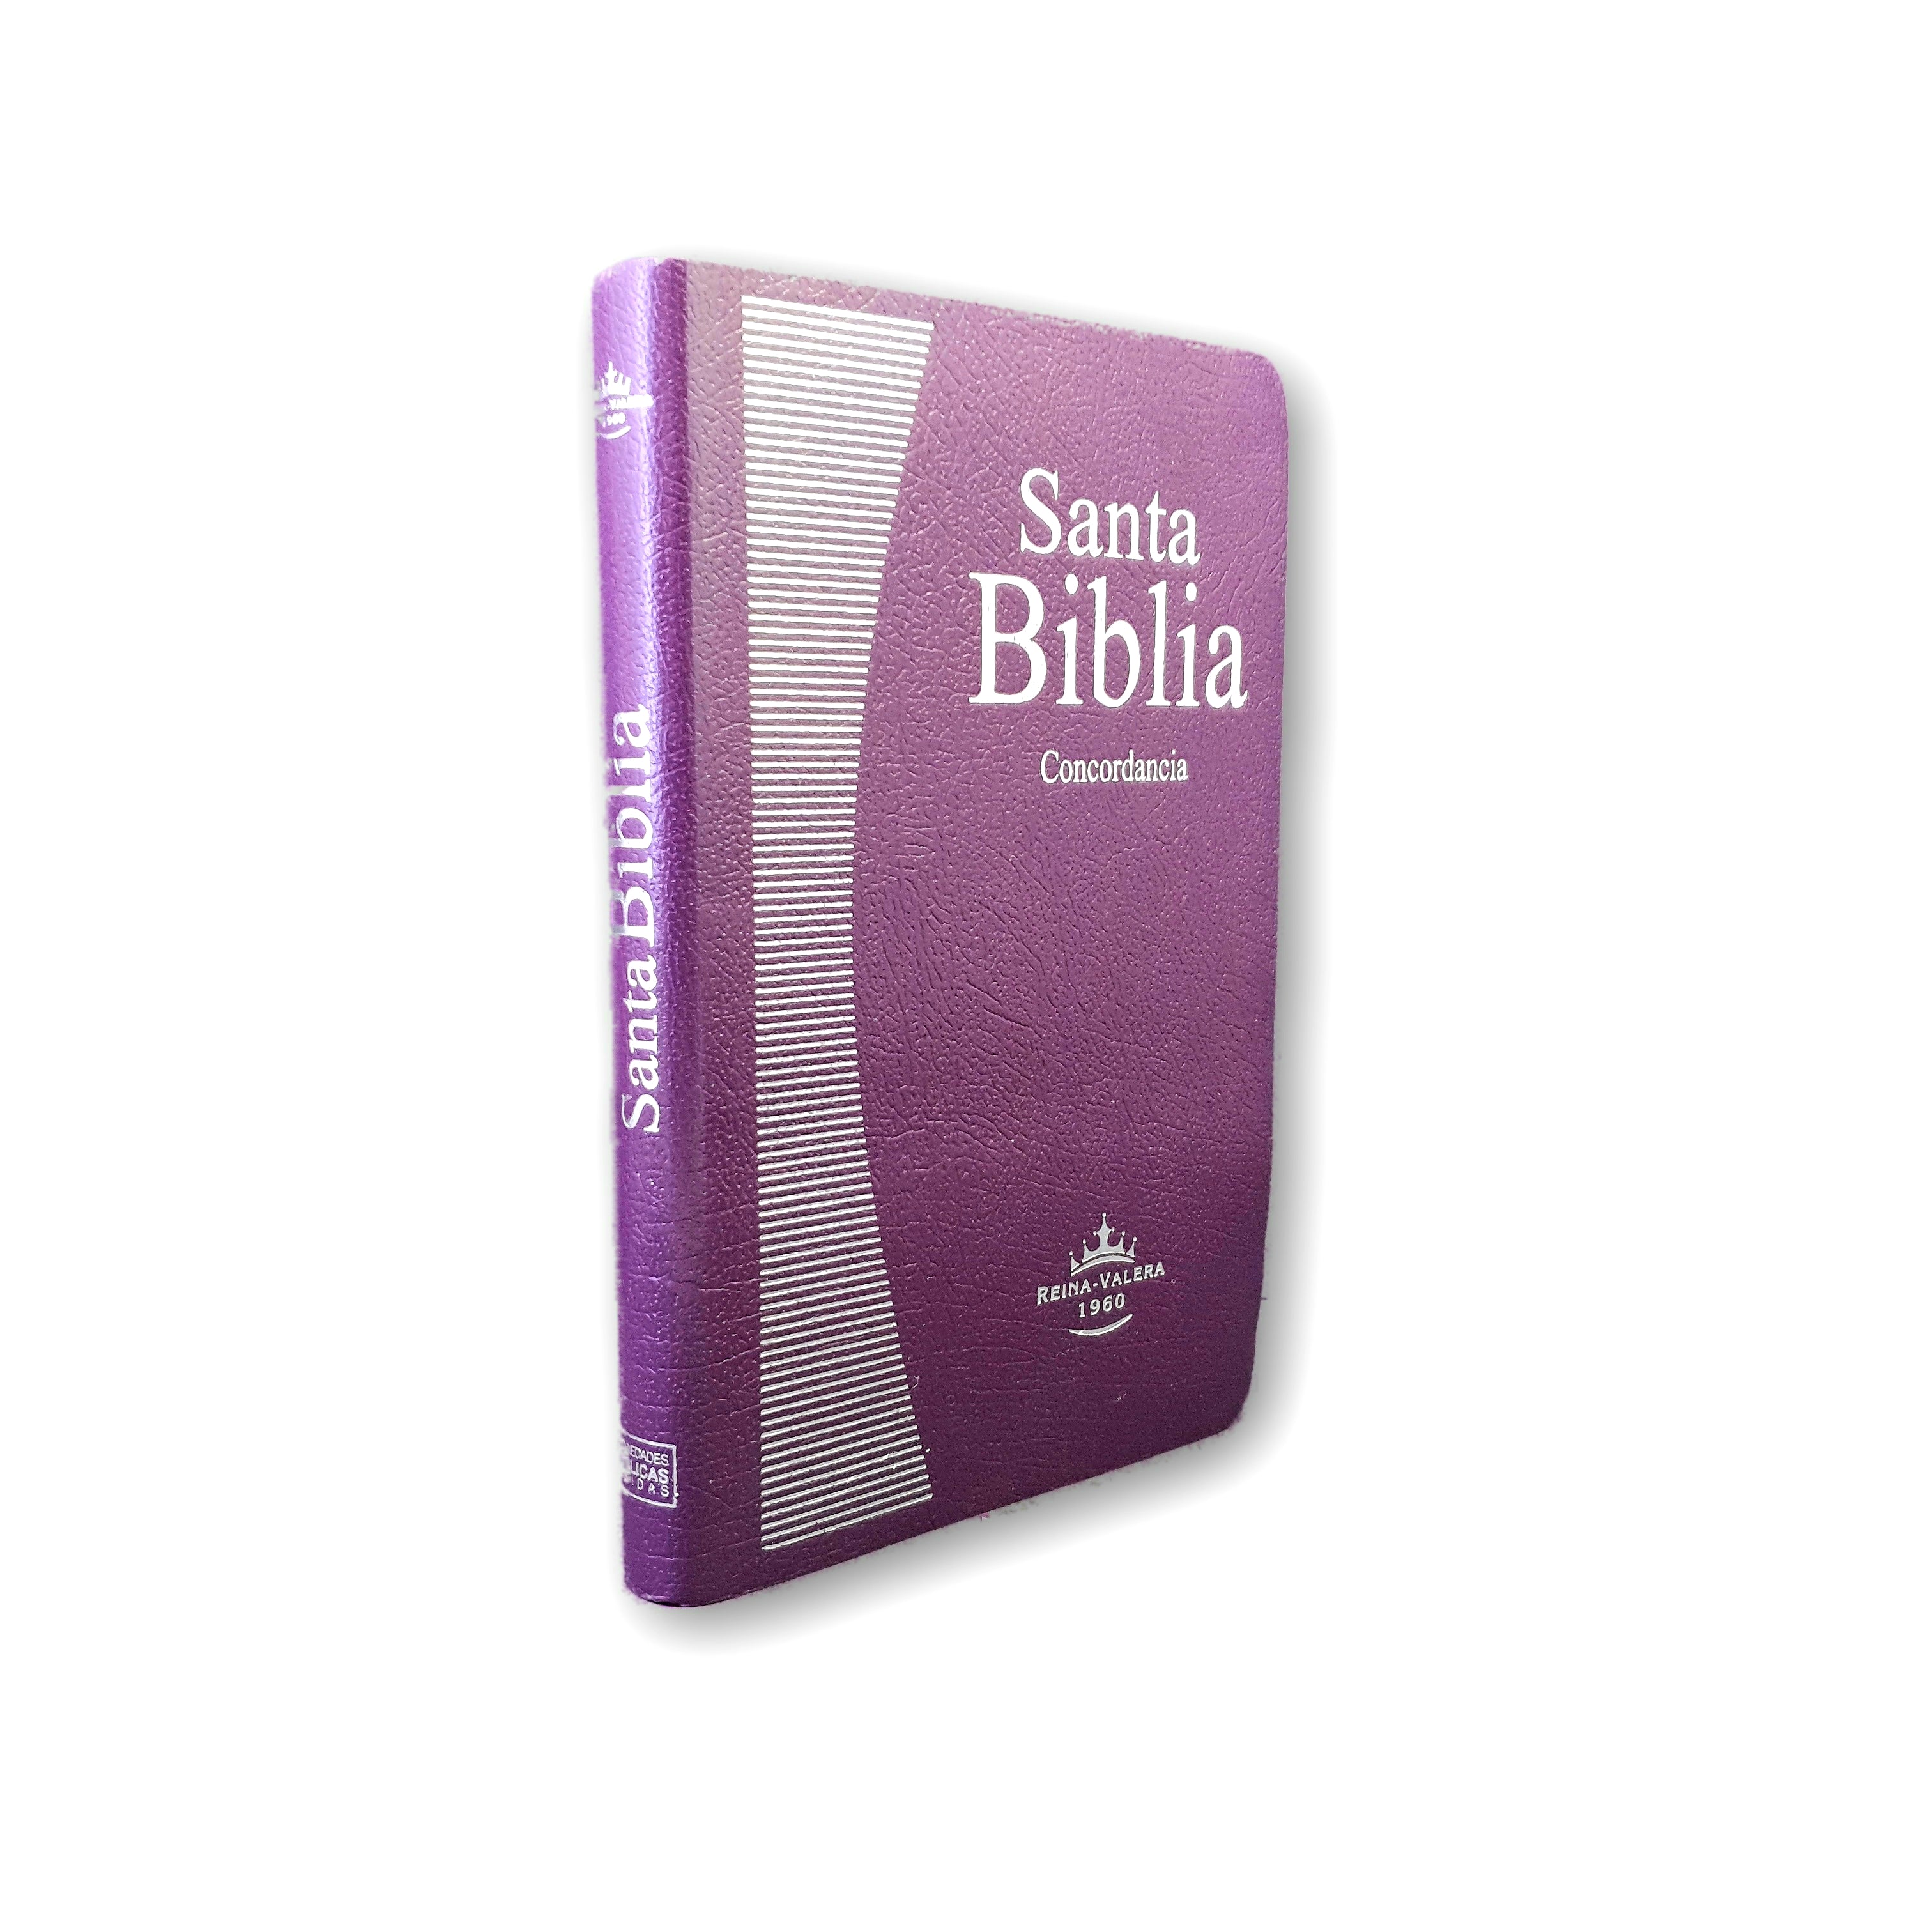 Santa Biblia RVR1960 c/Concordancia fina